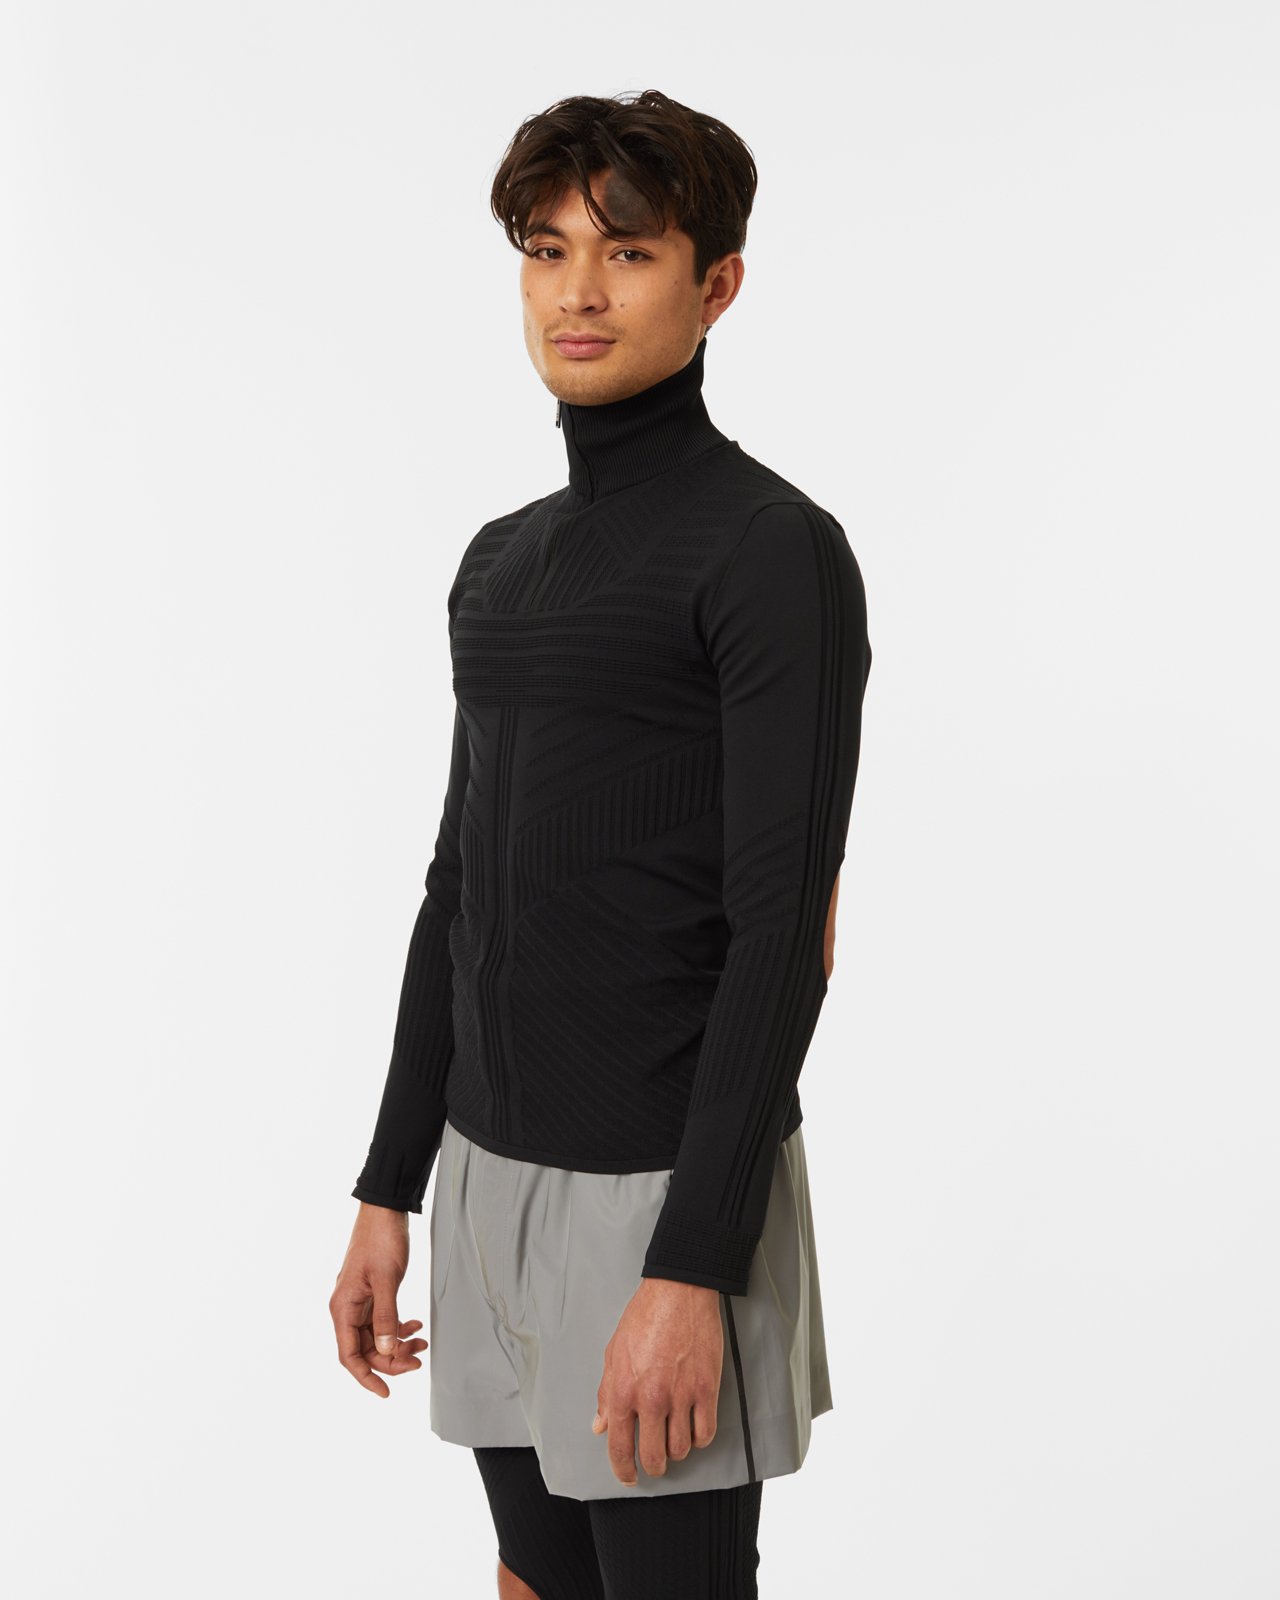 Prada - Knitted Nylon Top - Clothing - Black - Image 4